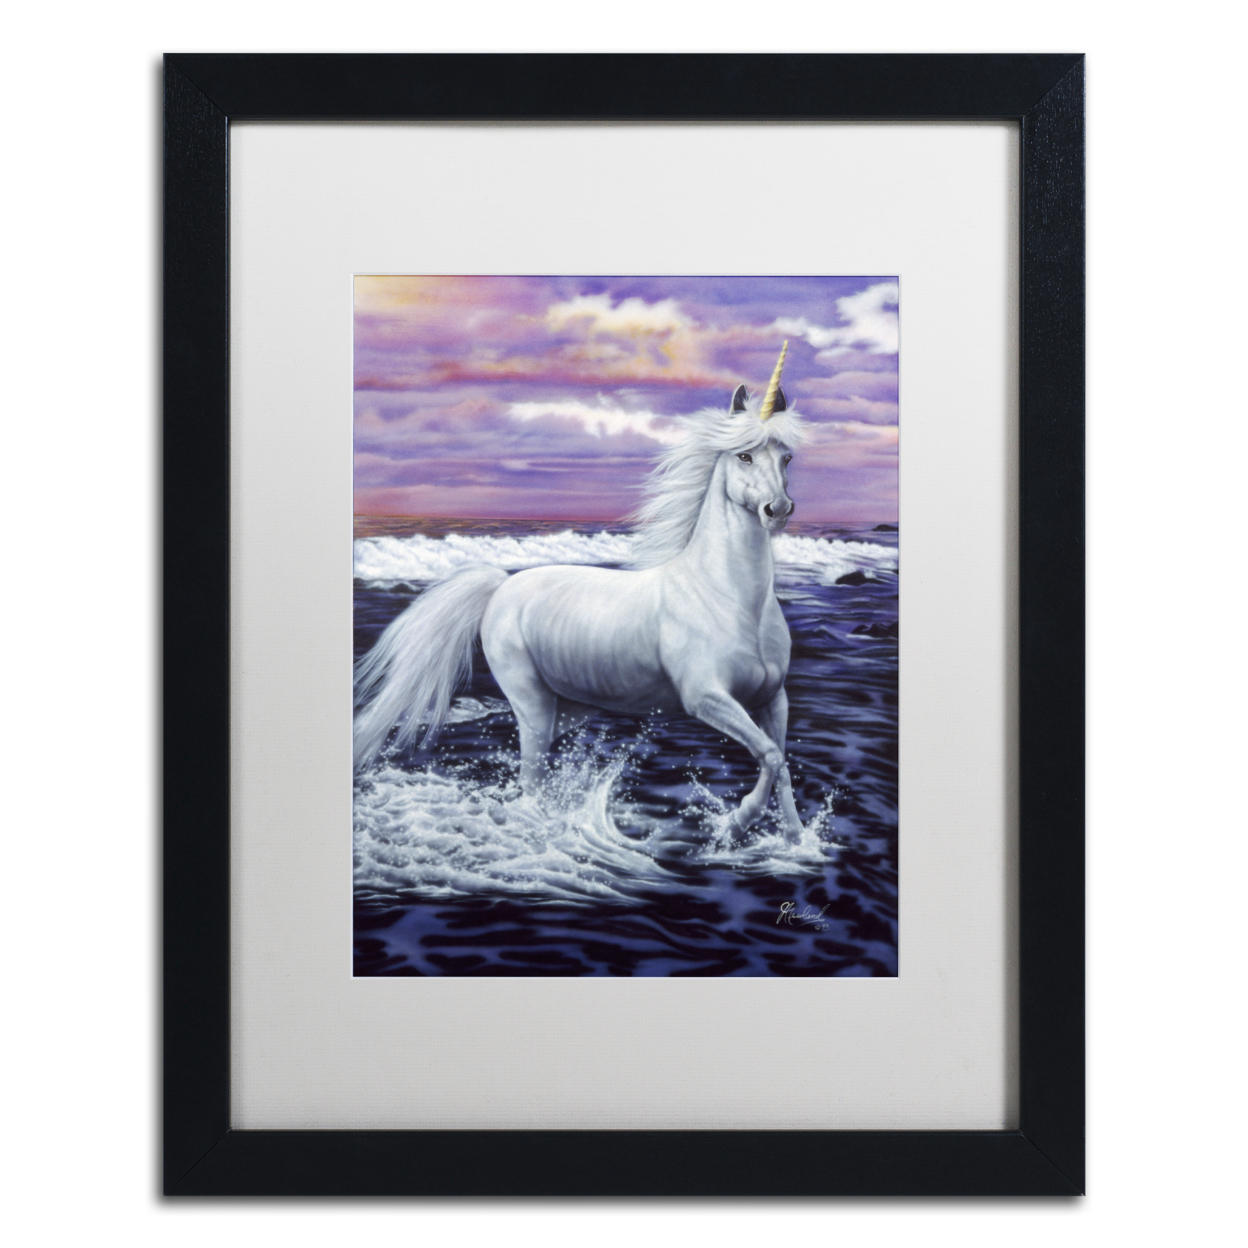 Jenny Newland 'Unicorn' Black Wooden Framed Art 18 X 22 Inches